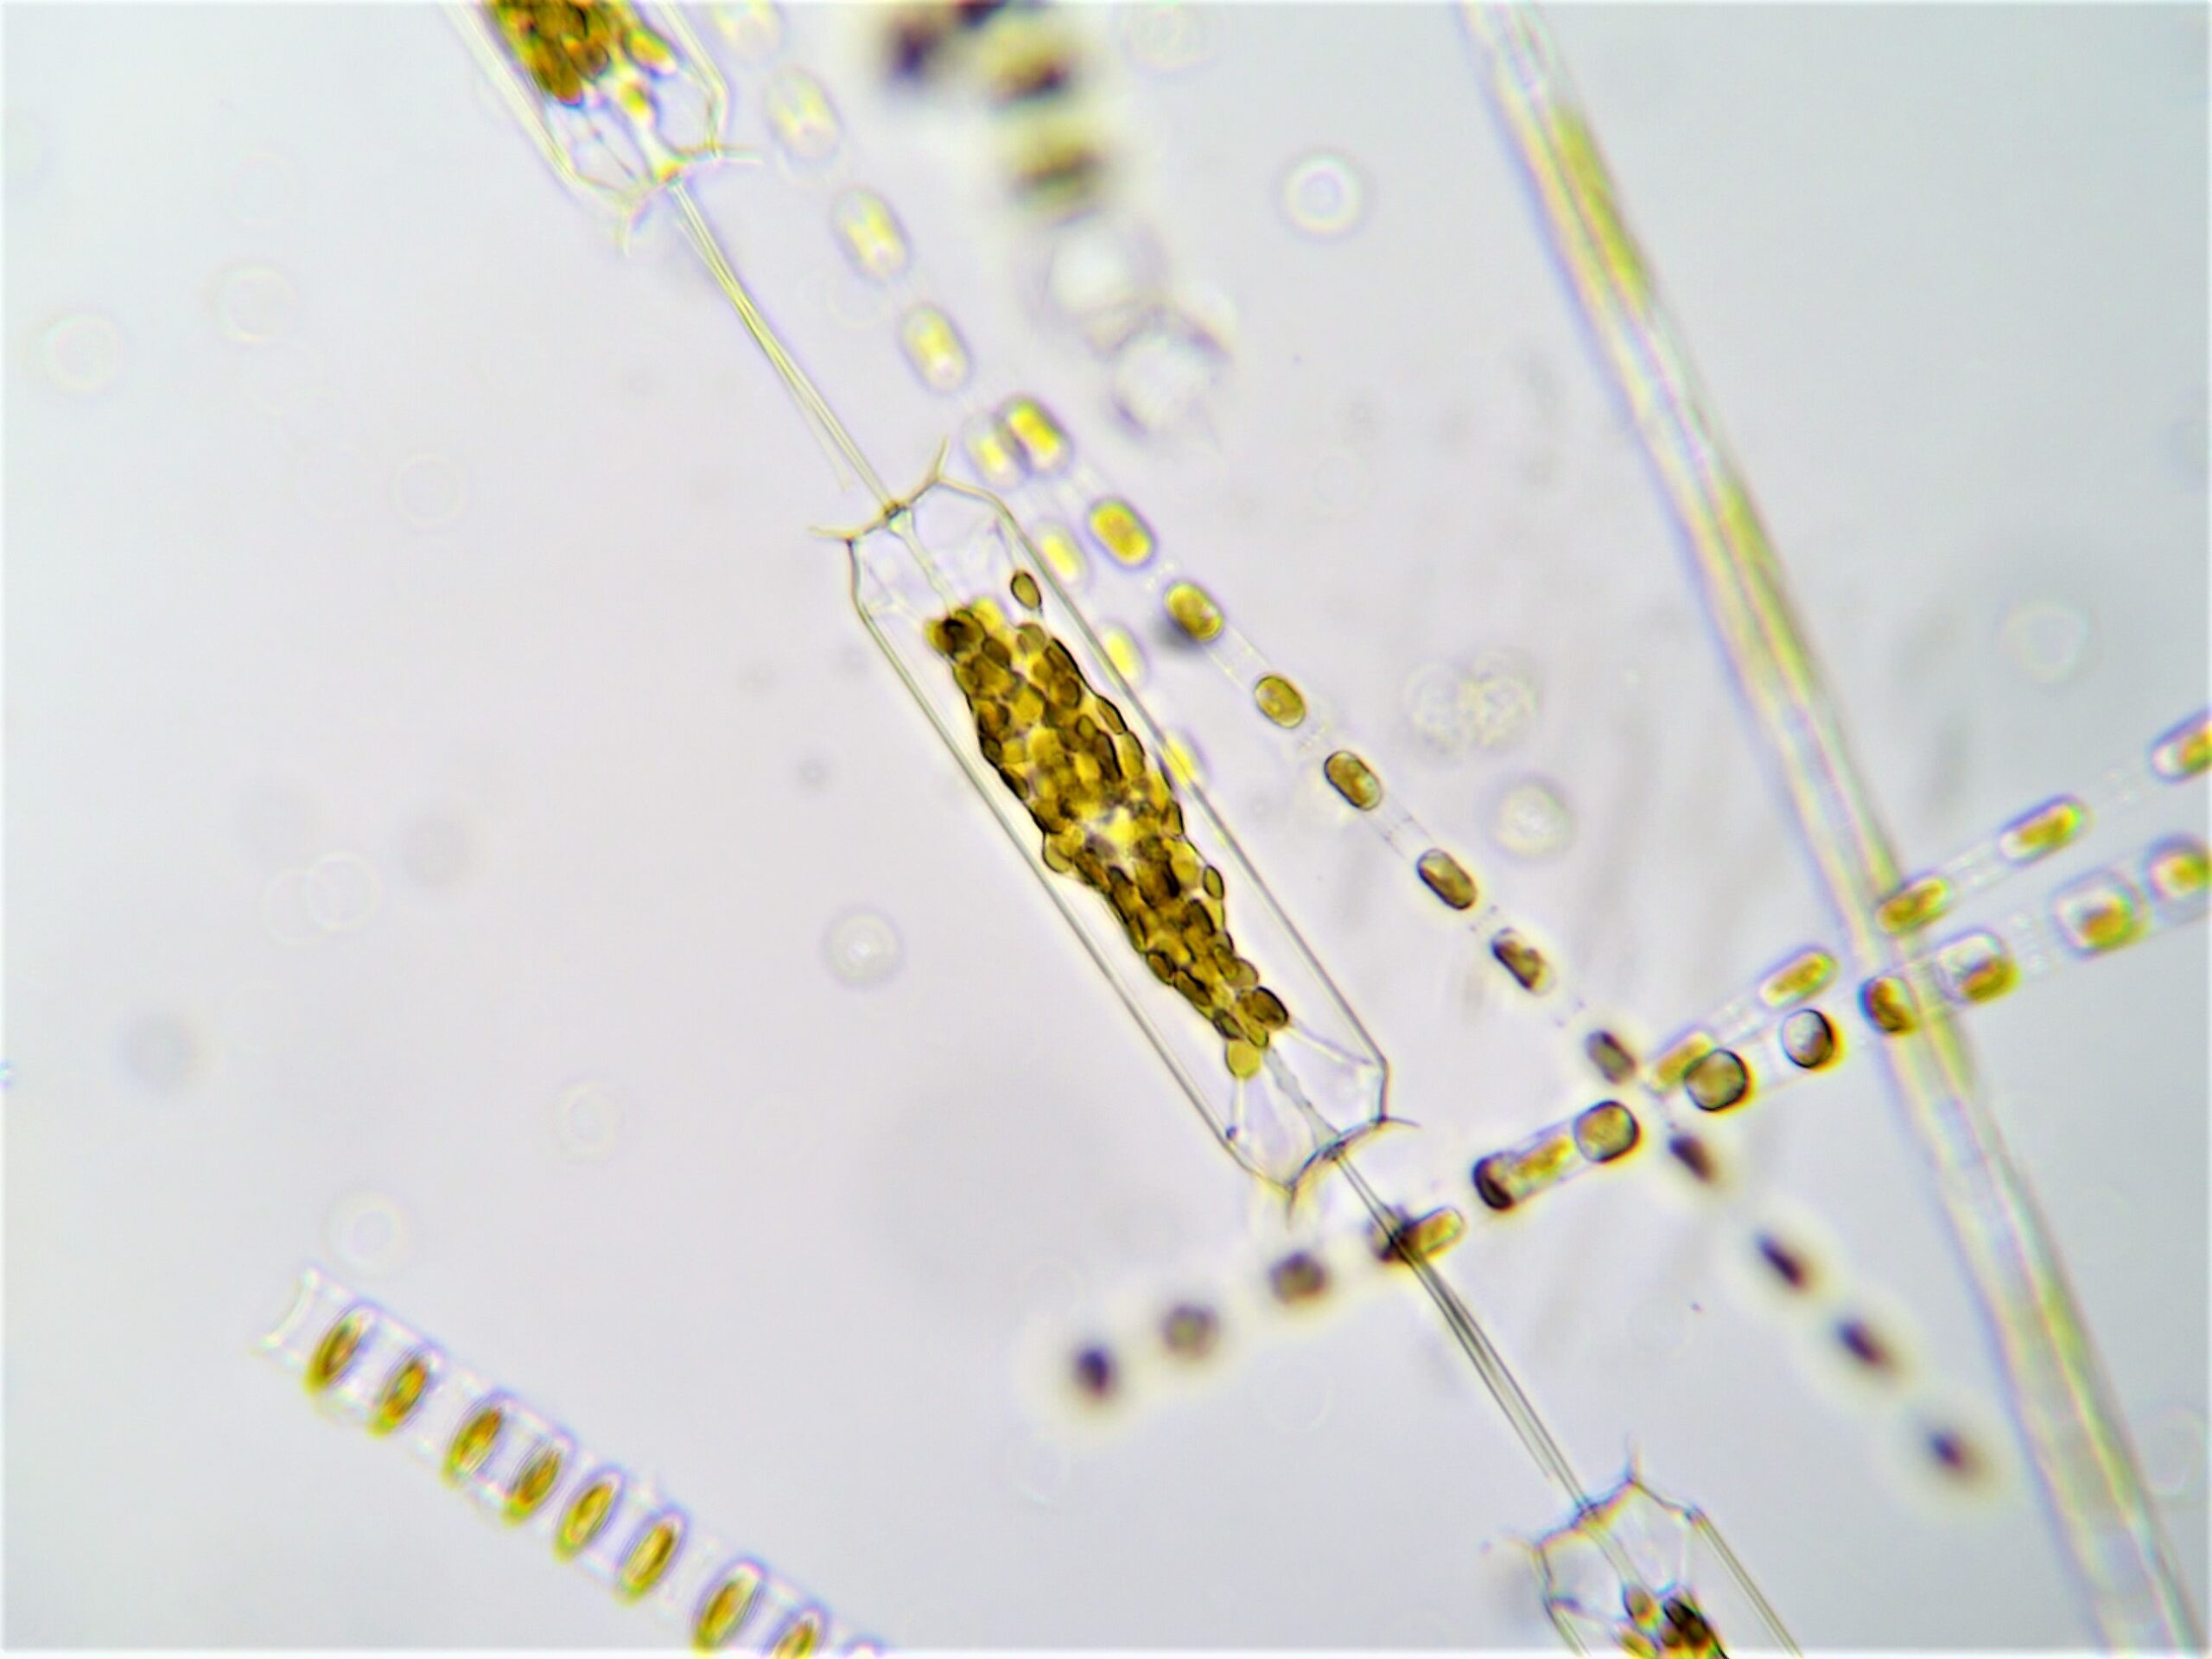 mixed phytoplankton, ditylum spp individual centered